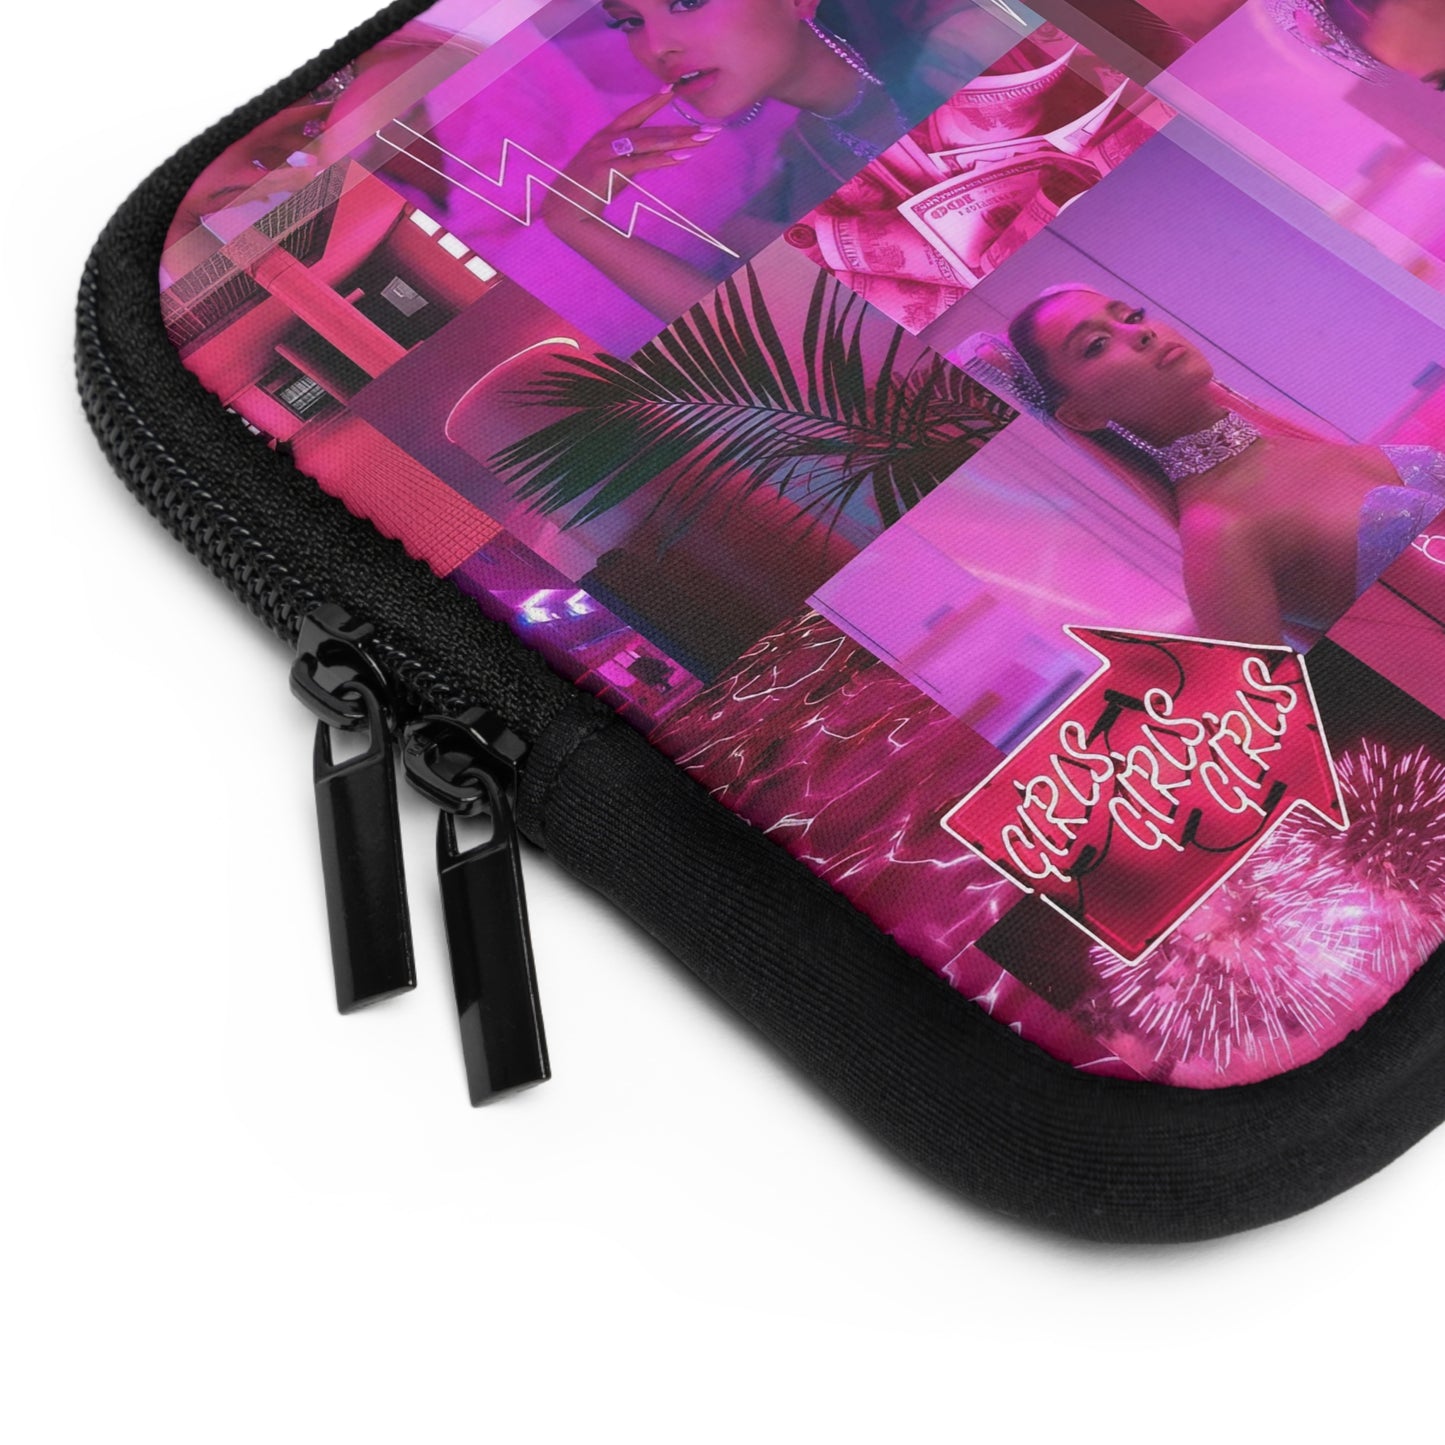 Ariana Grande 7 Rings Collage Laptop Sleeve